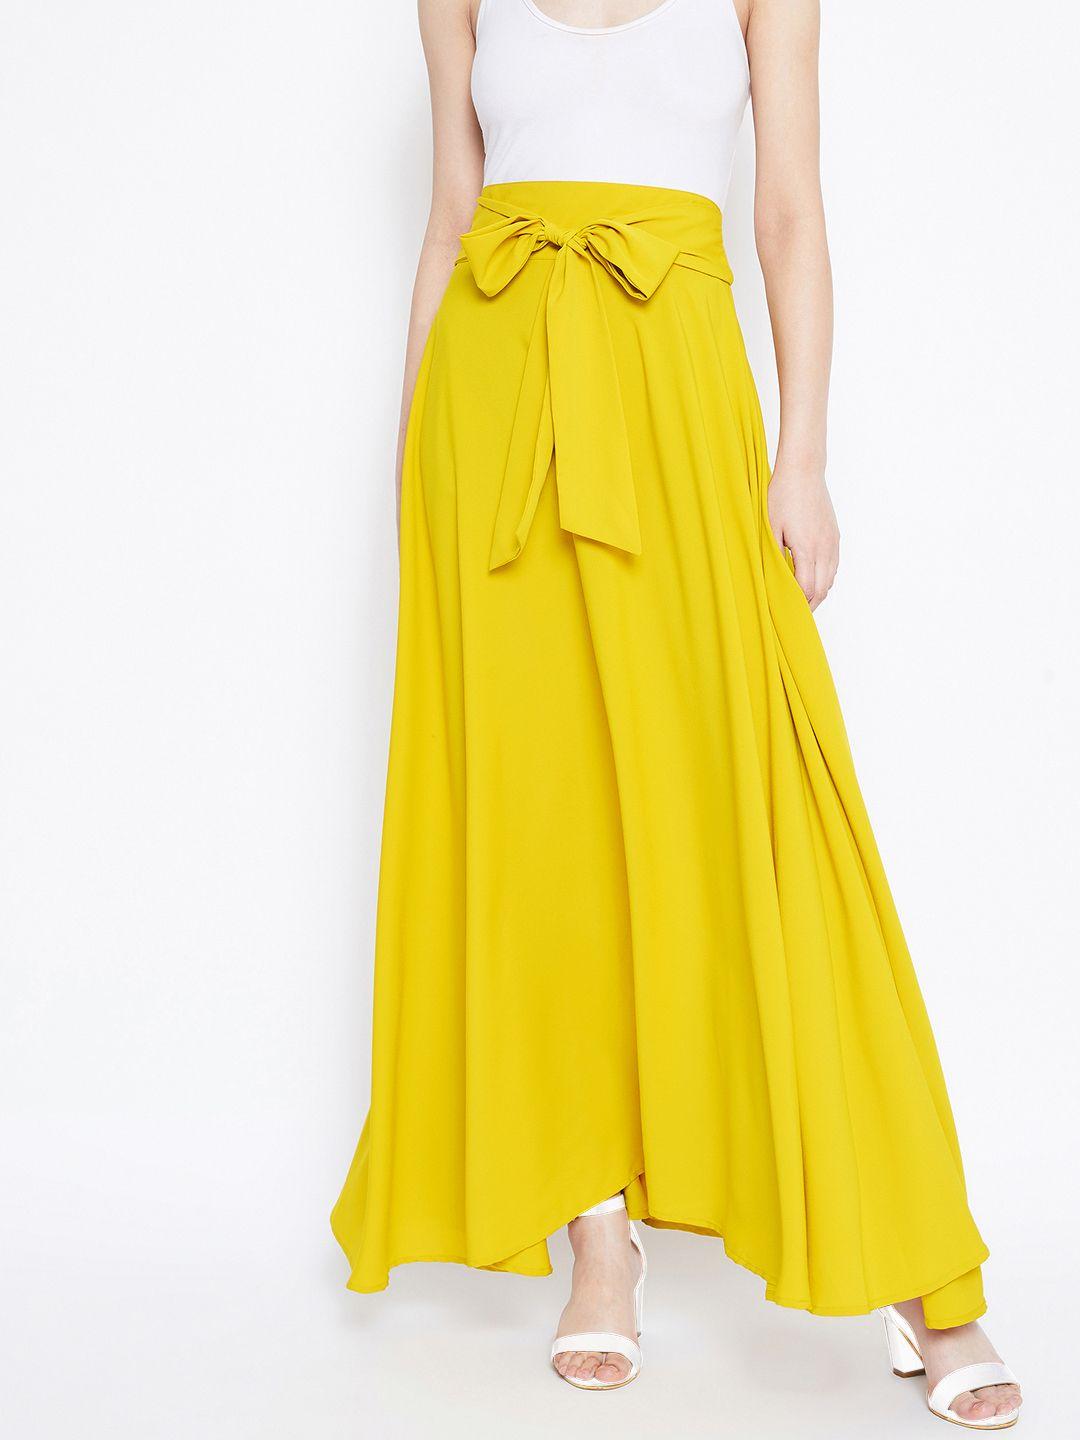 berrylush yellow flared maxi skirt